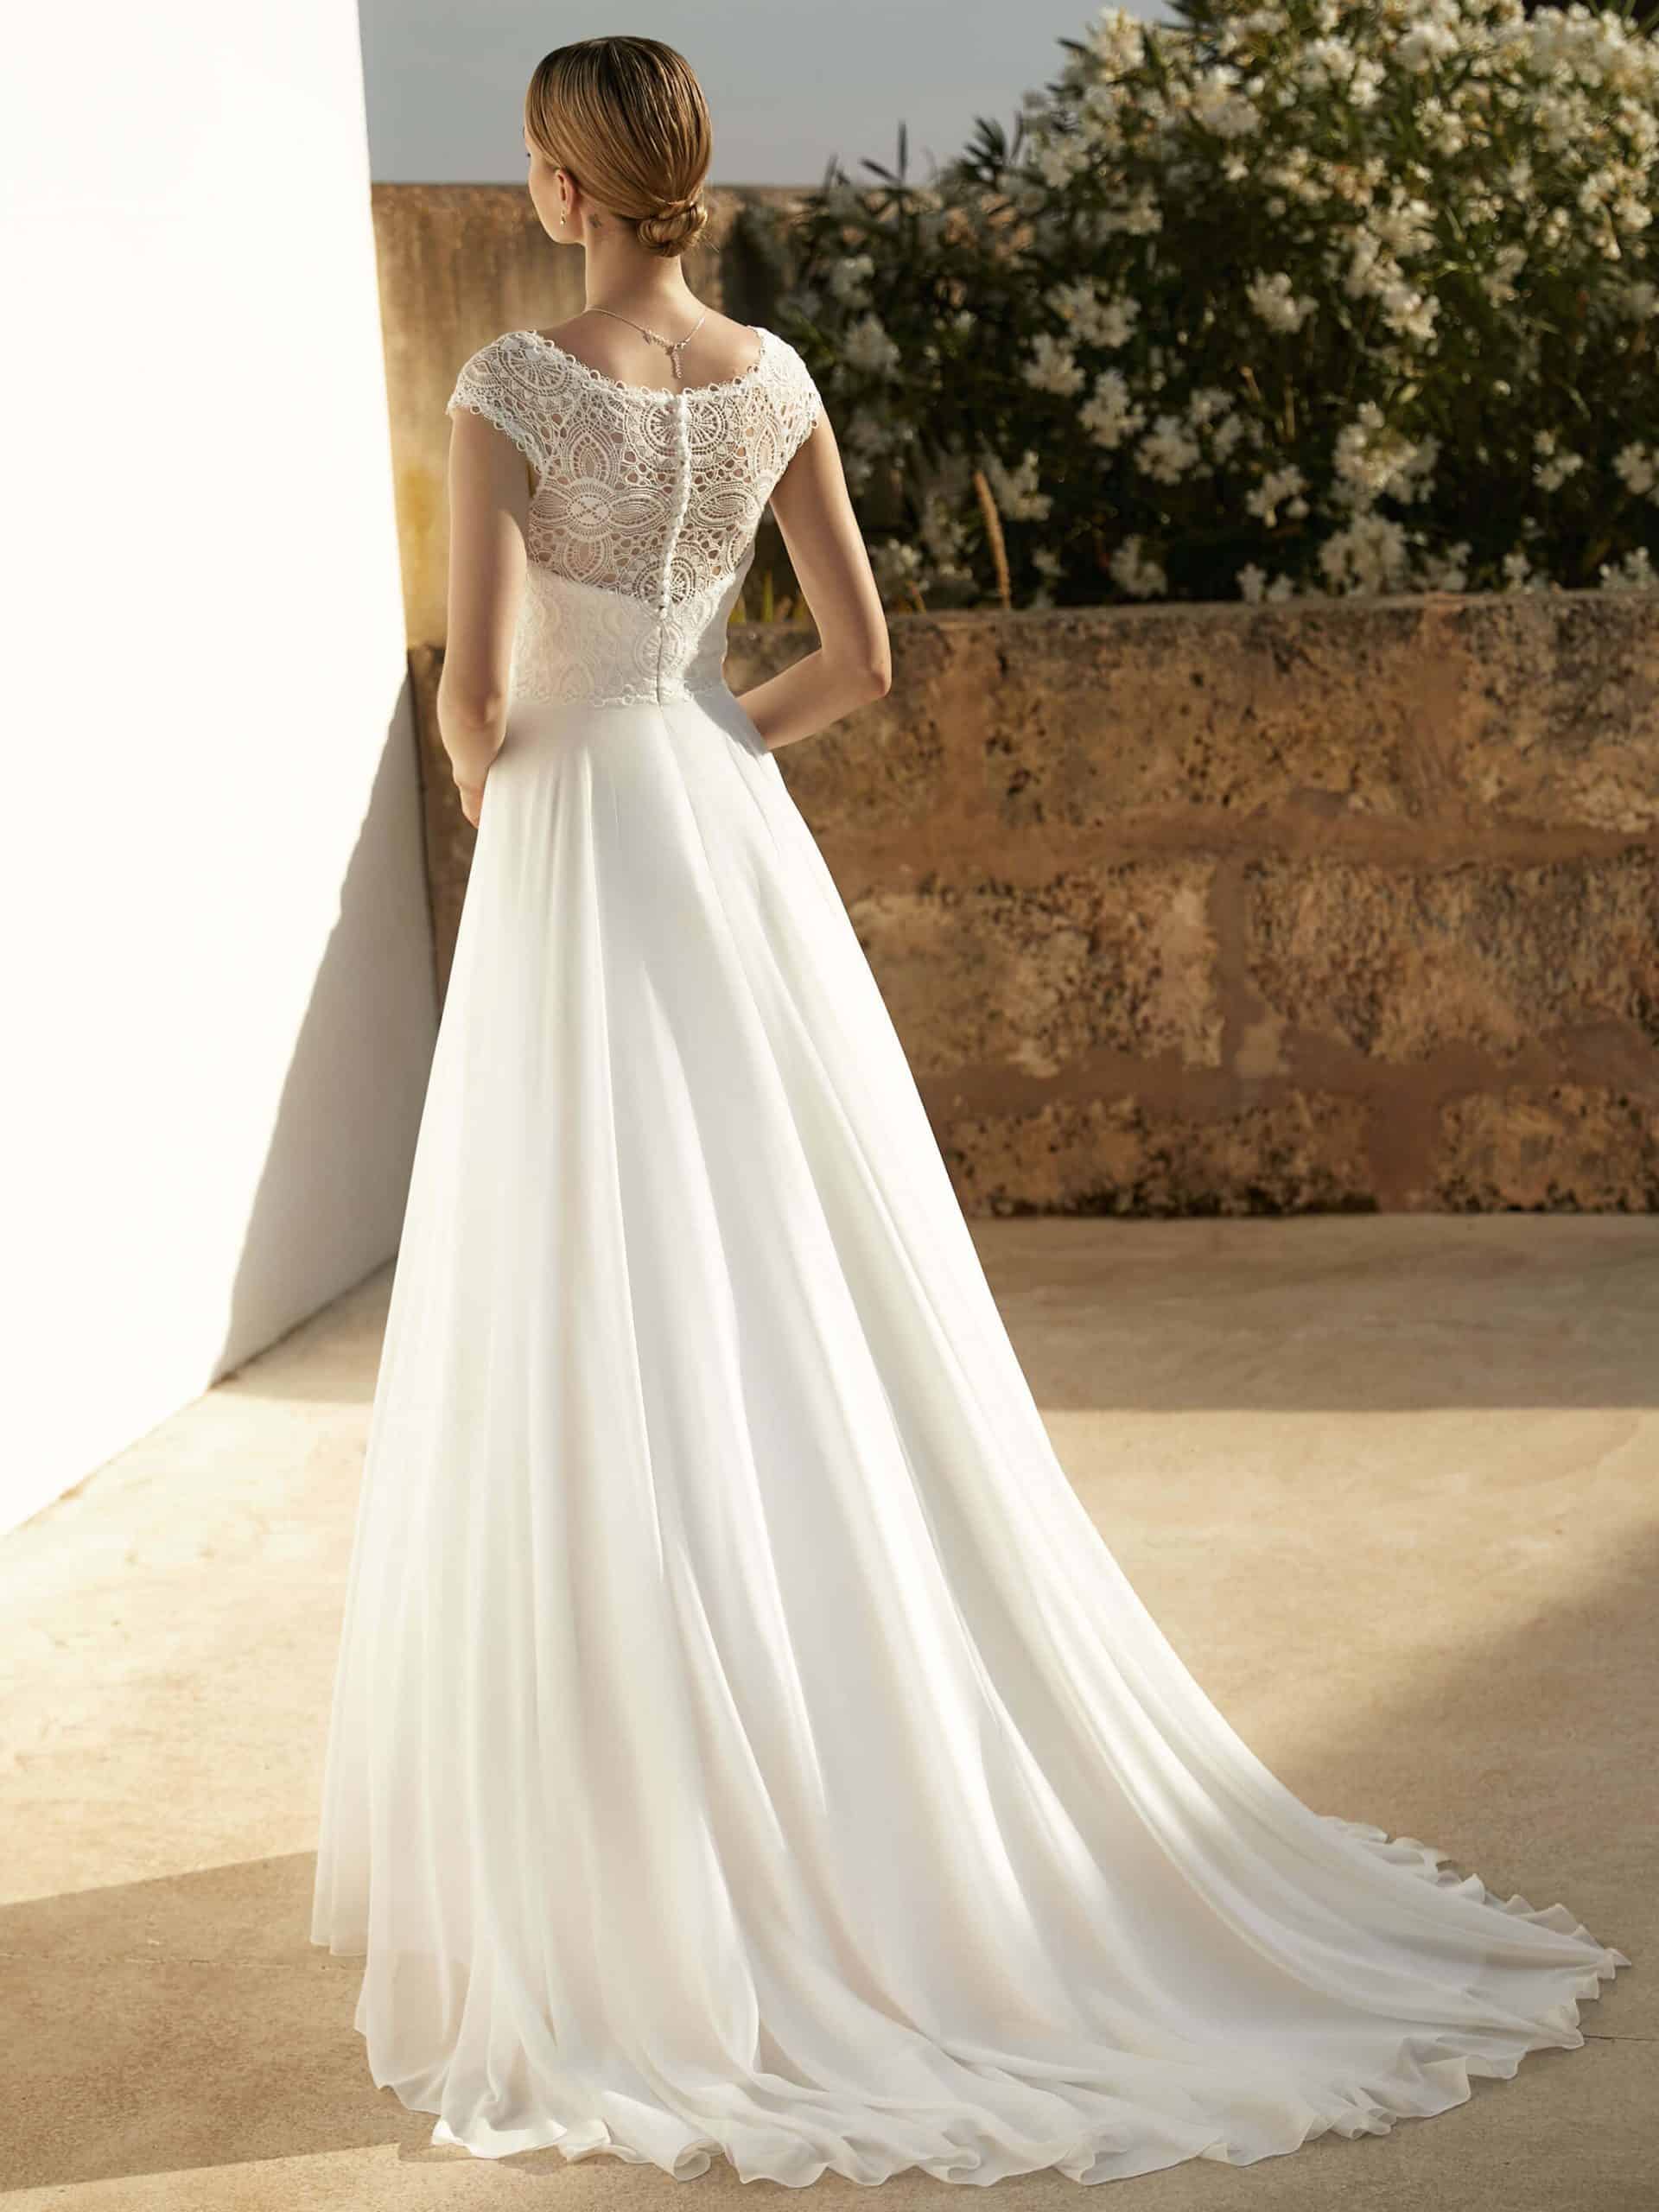 Bianco-Evento-bridal-dress-CLAUDIA-2-scaled